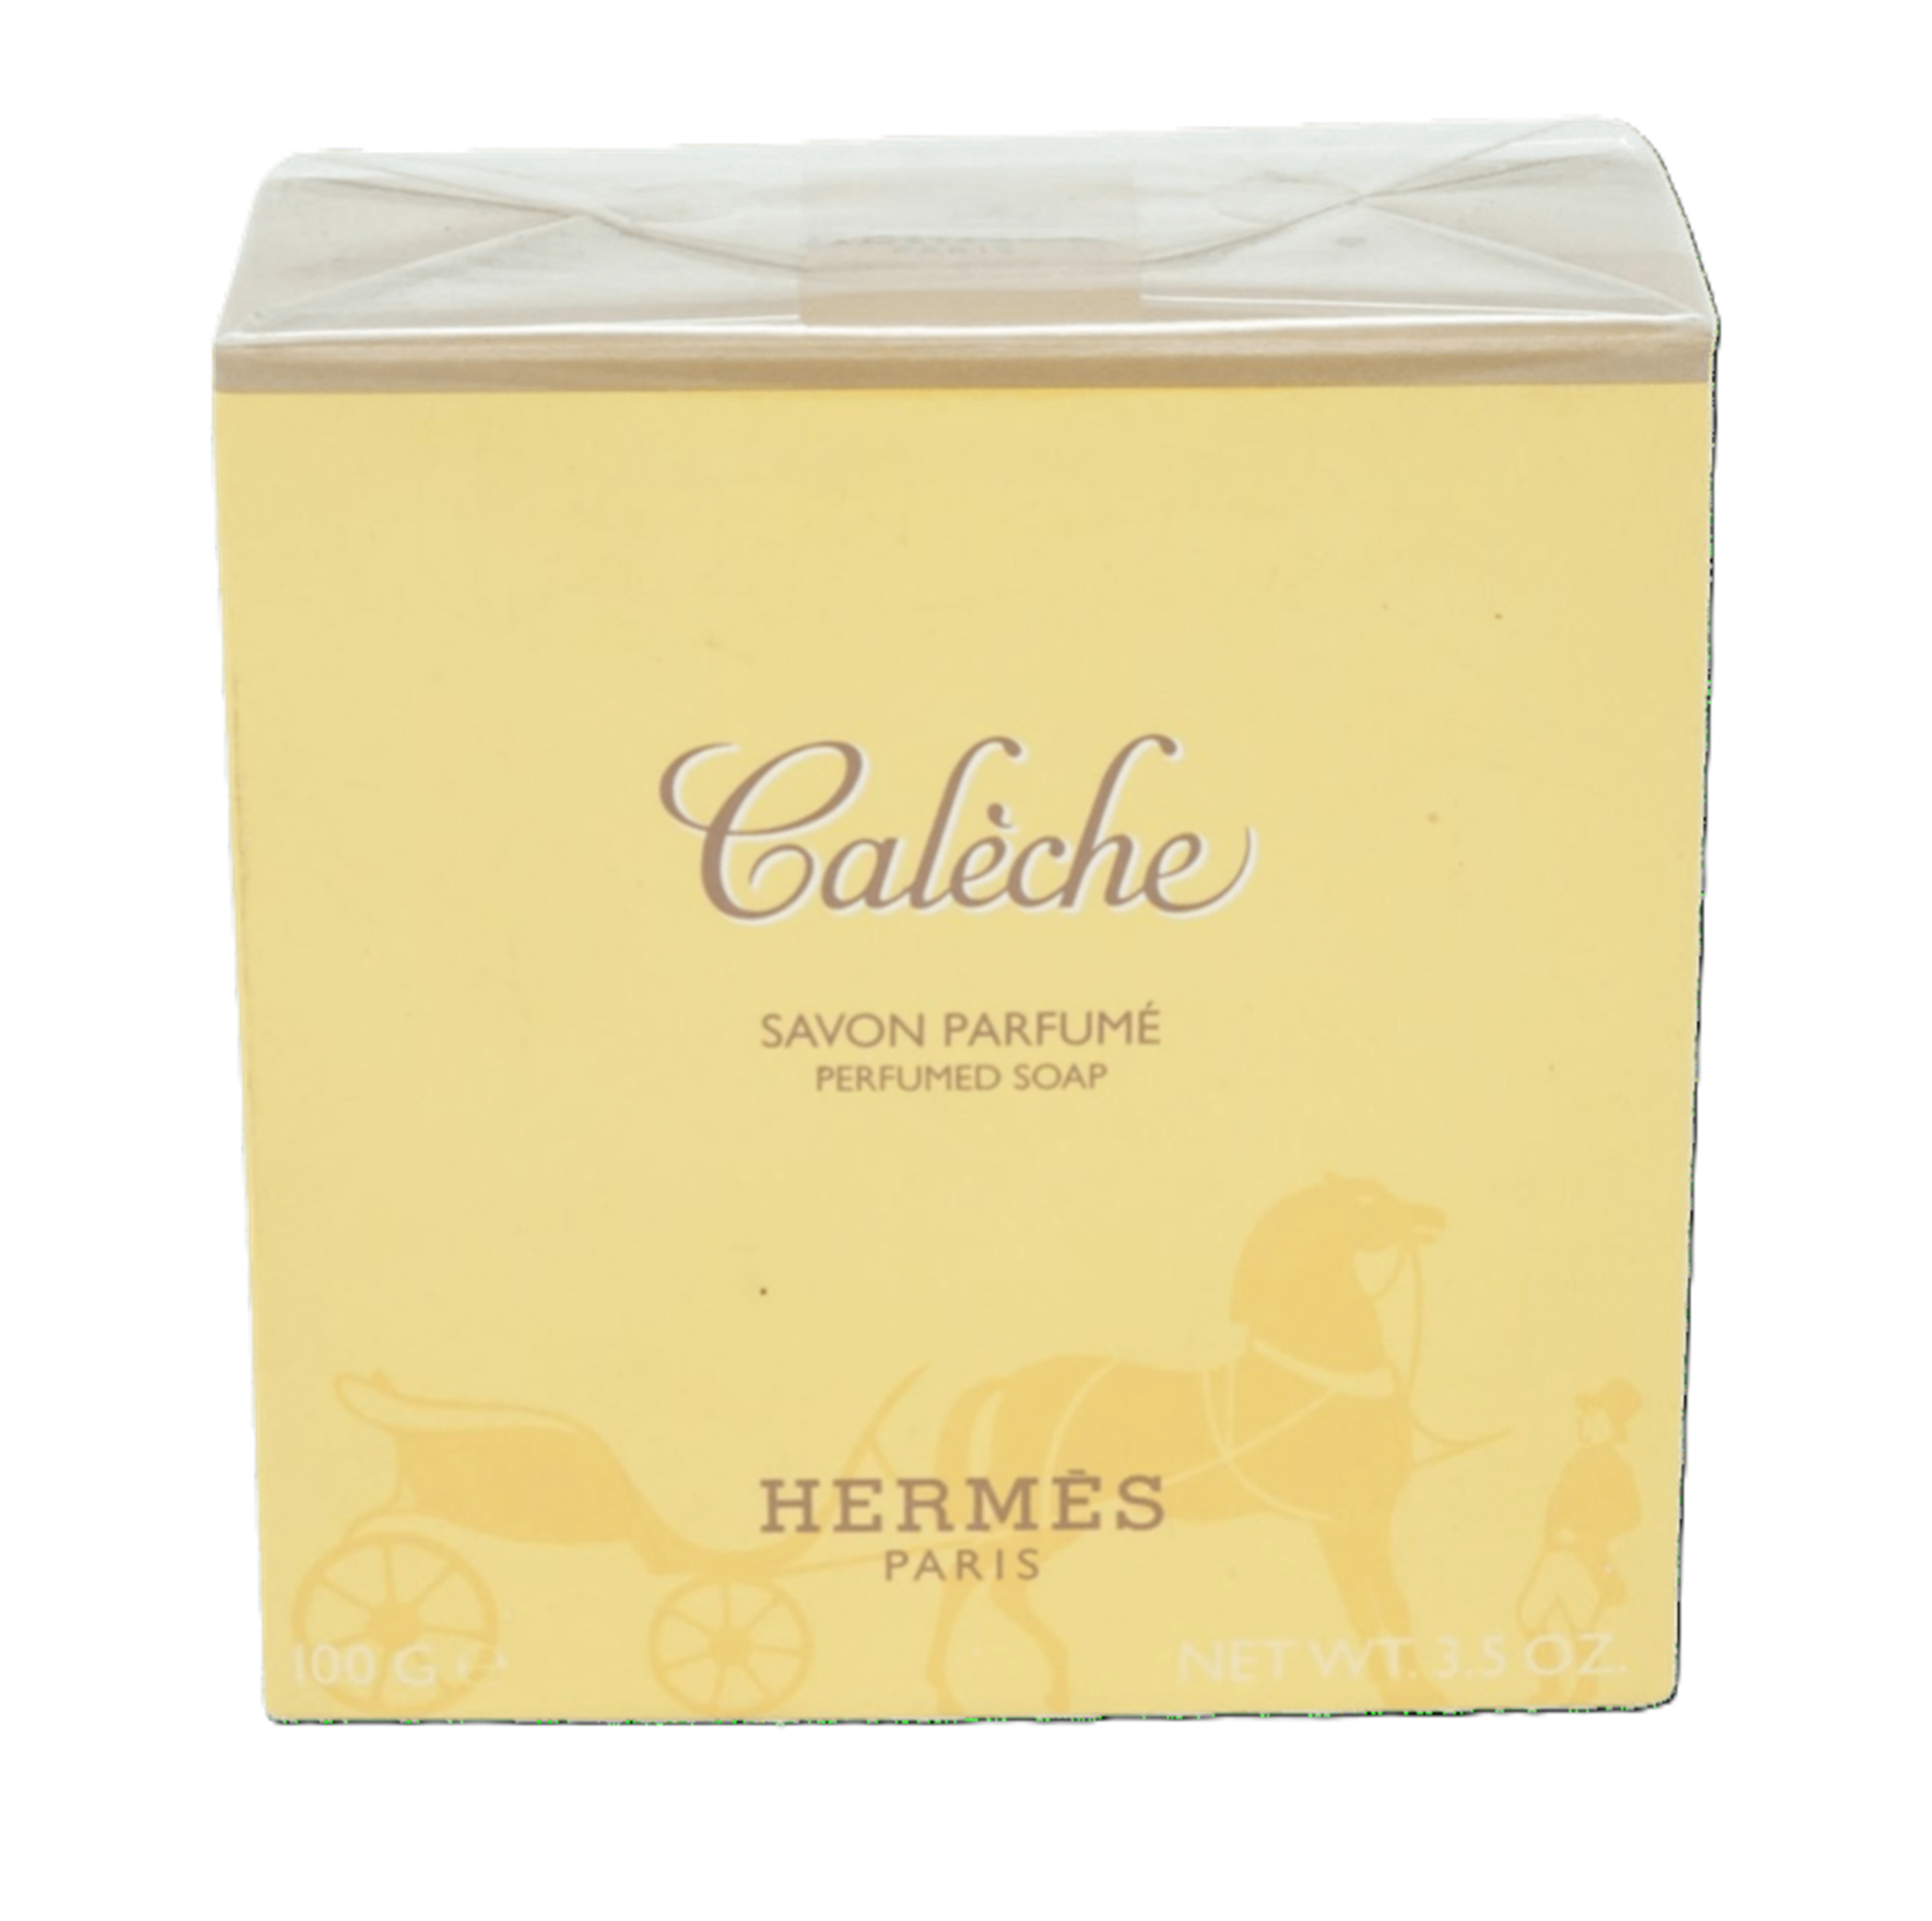 Hermes Galeche Perfumed Soap Seife 100g